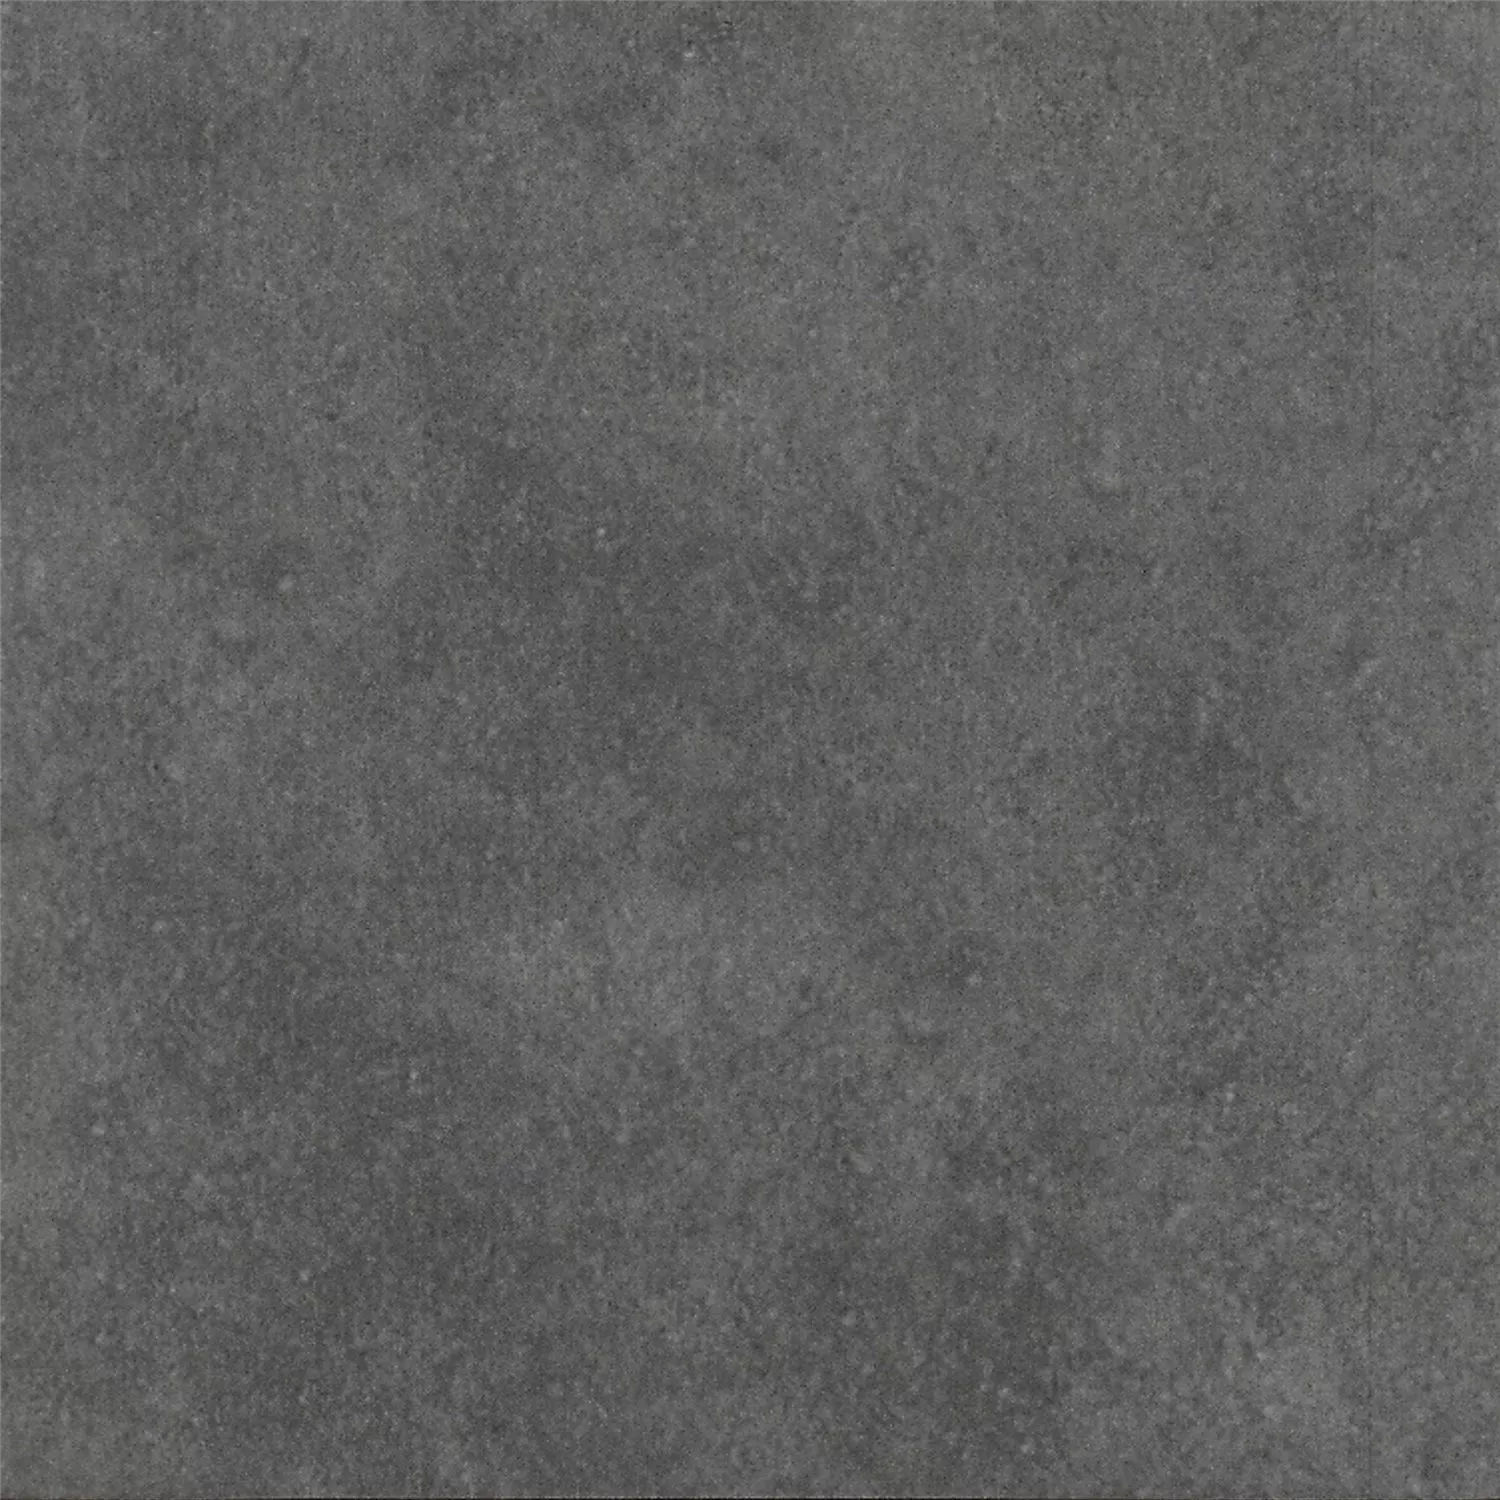 Sample Cementtegels Optiek Gotik Basistegel Donkergrijs 22,3x22,3cm